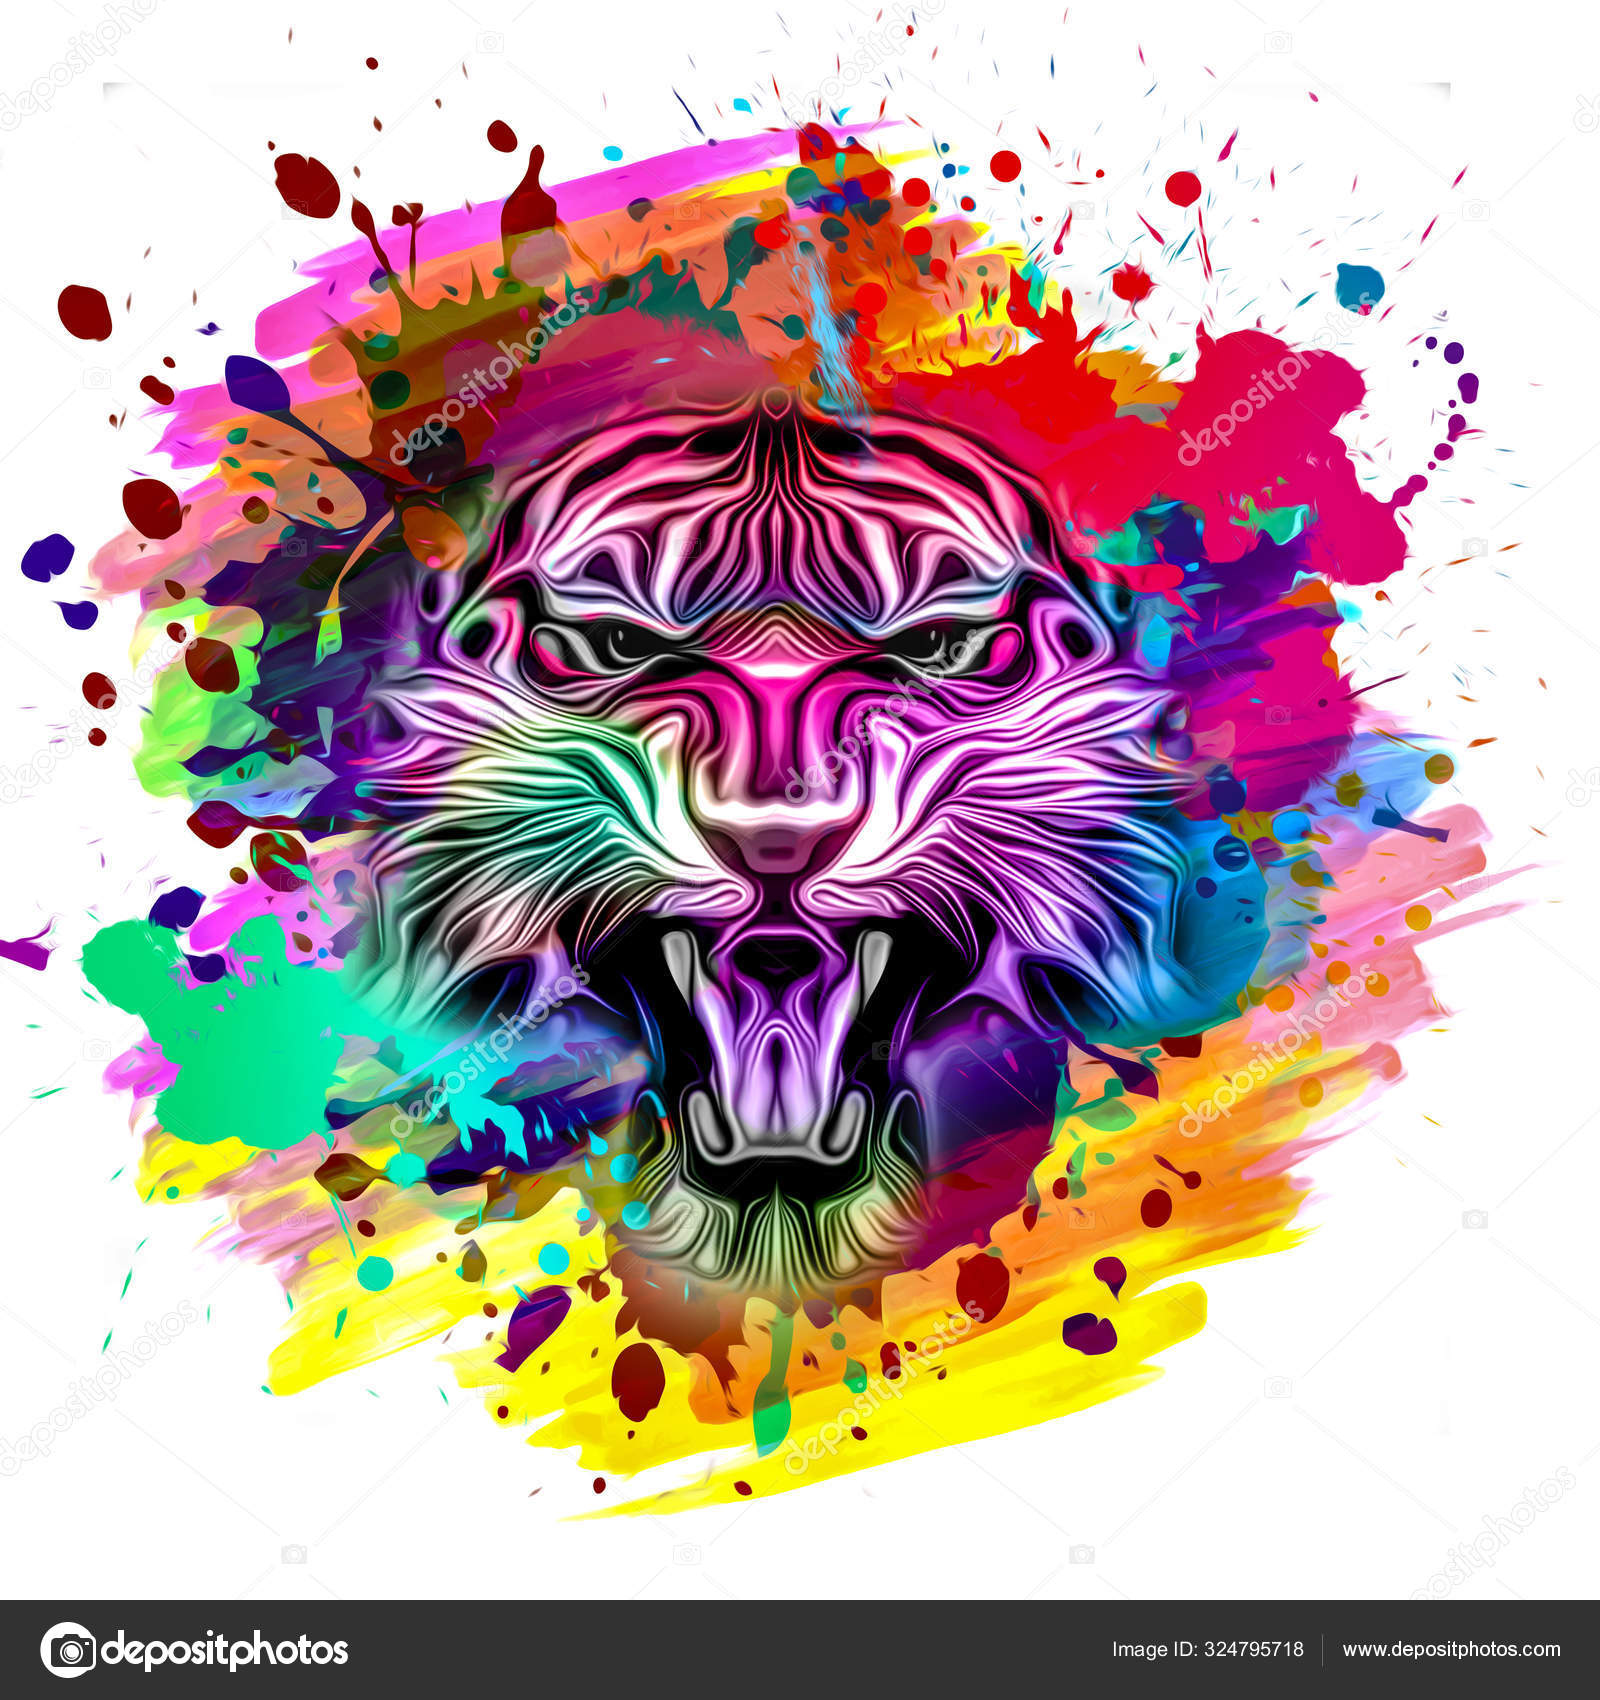 depositphotos_324795718-stock-photo-angry-tiger-logo-colorful-abstract